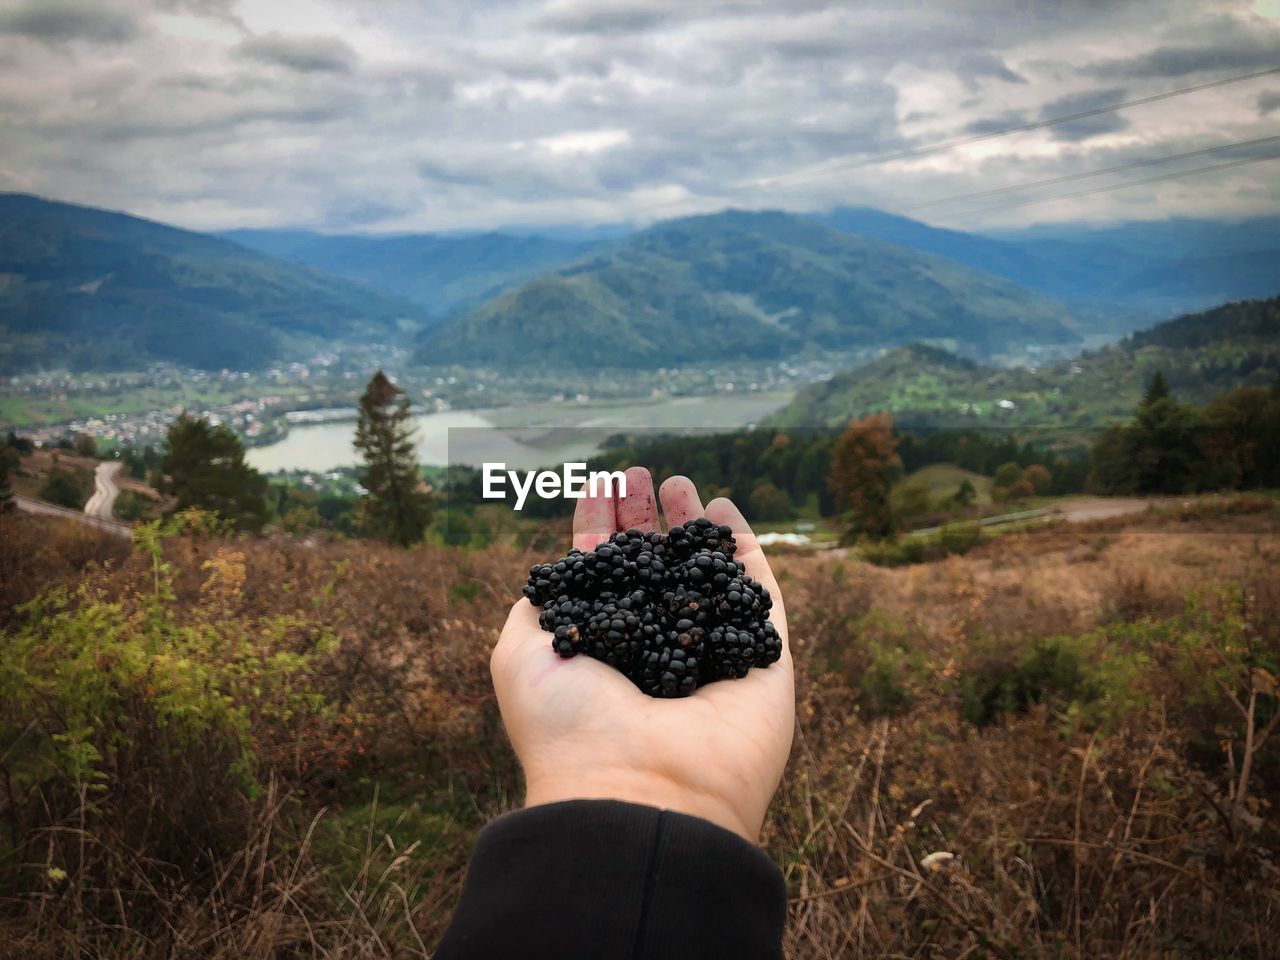 Hand holding blackberries against landscape of mountains